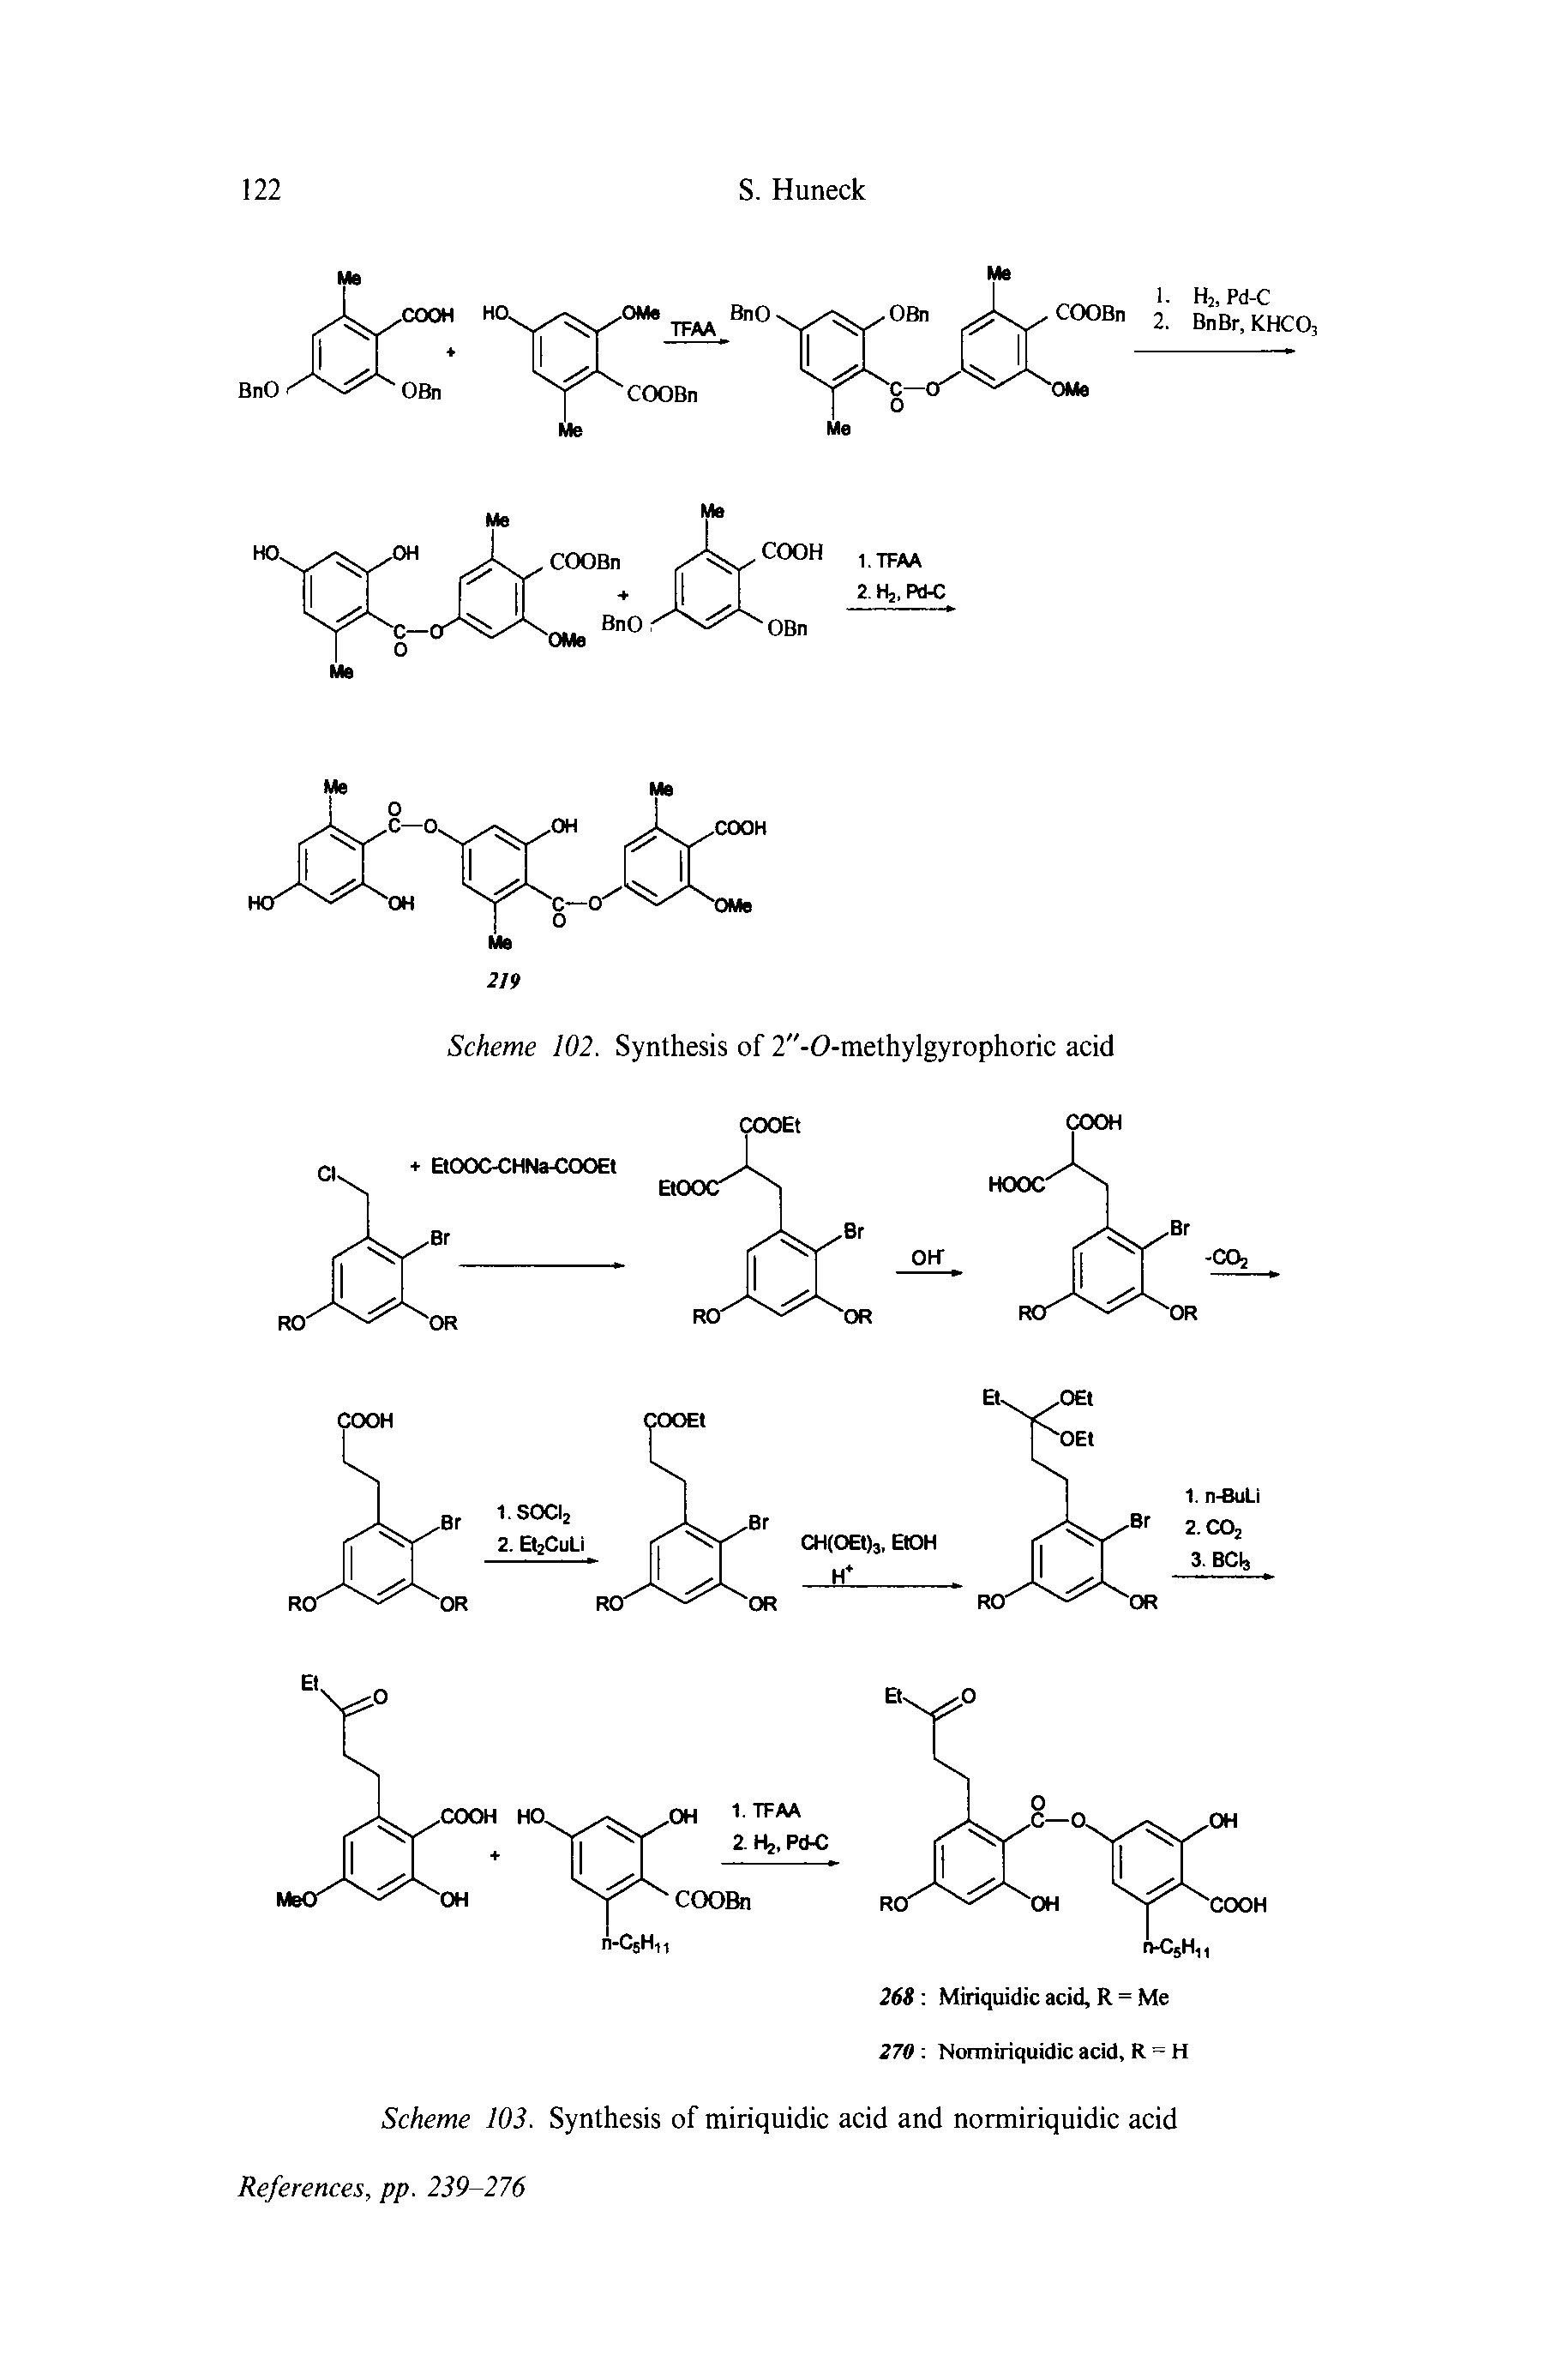 Scheme 103. Synthesis of miriquidic acid and normiriquidic acid References, pp. 239-276...